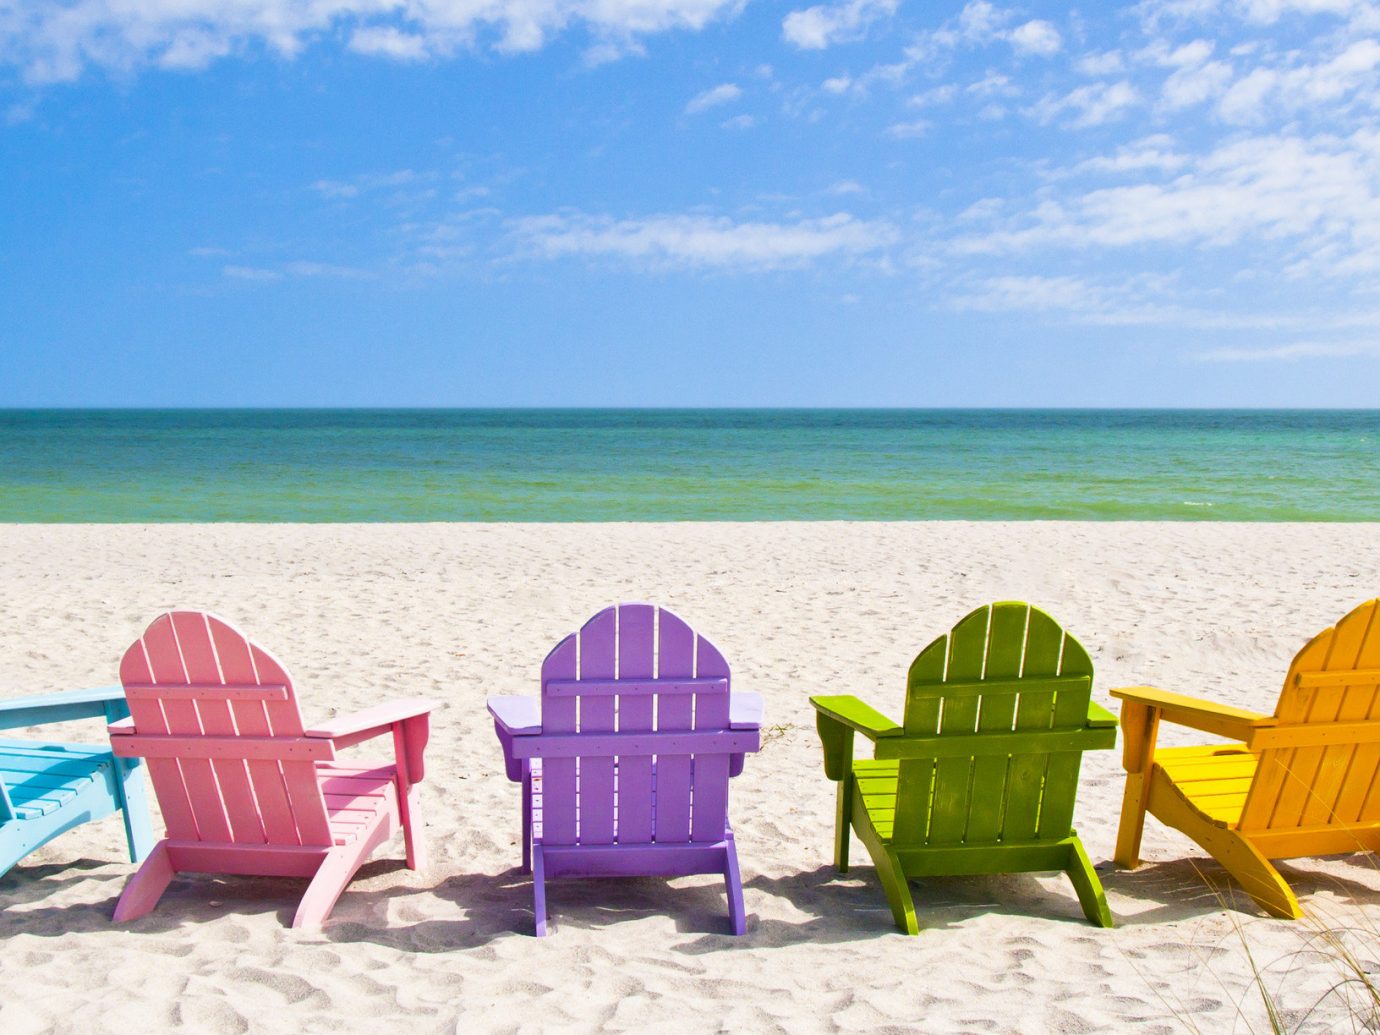 Trip Ideas outdoor sky ground chair Beach vacation Sea summer shore tourism leisure sand Ocean caribbean lawn water fun sun tanning